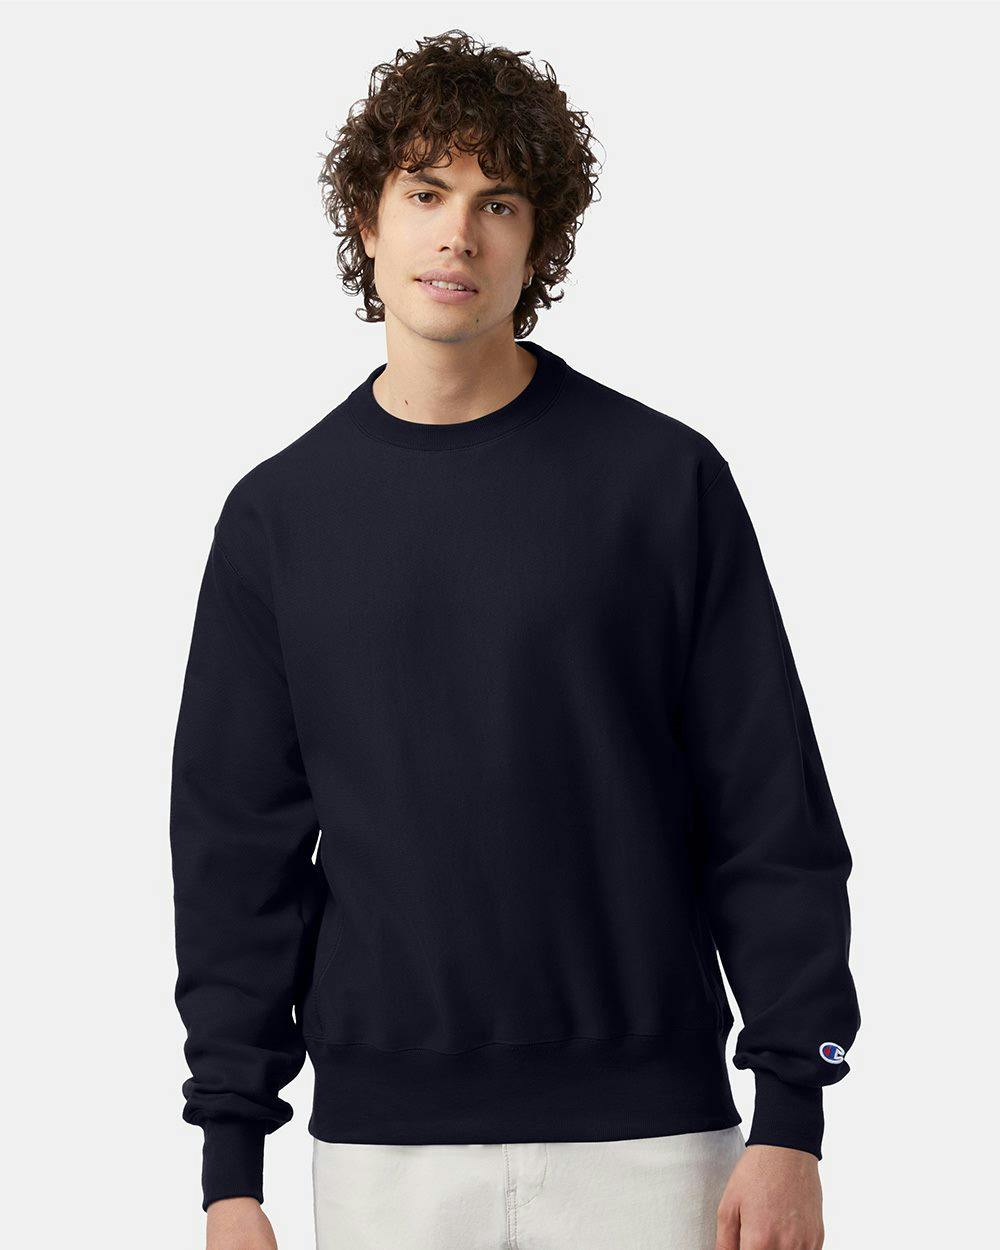 Image for Reverse Weave® Crewneck Sweatshirt - S149